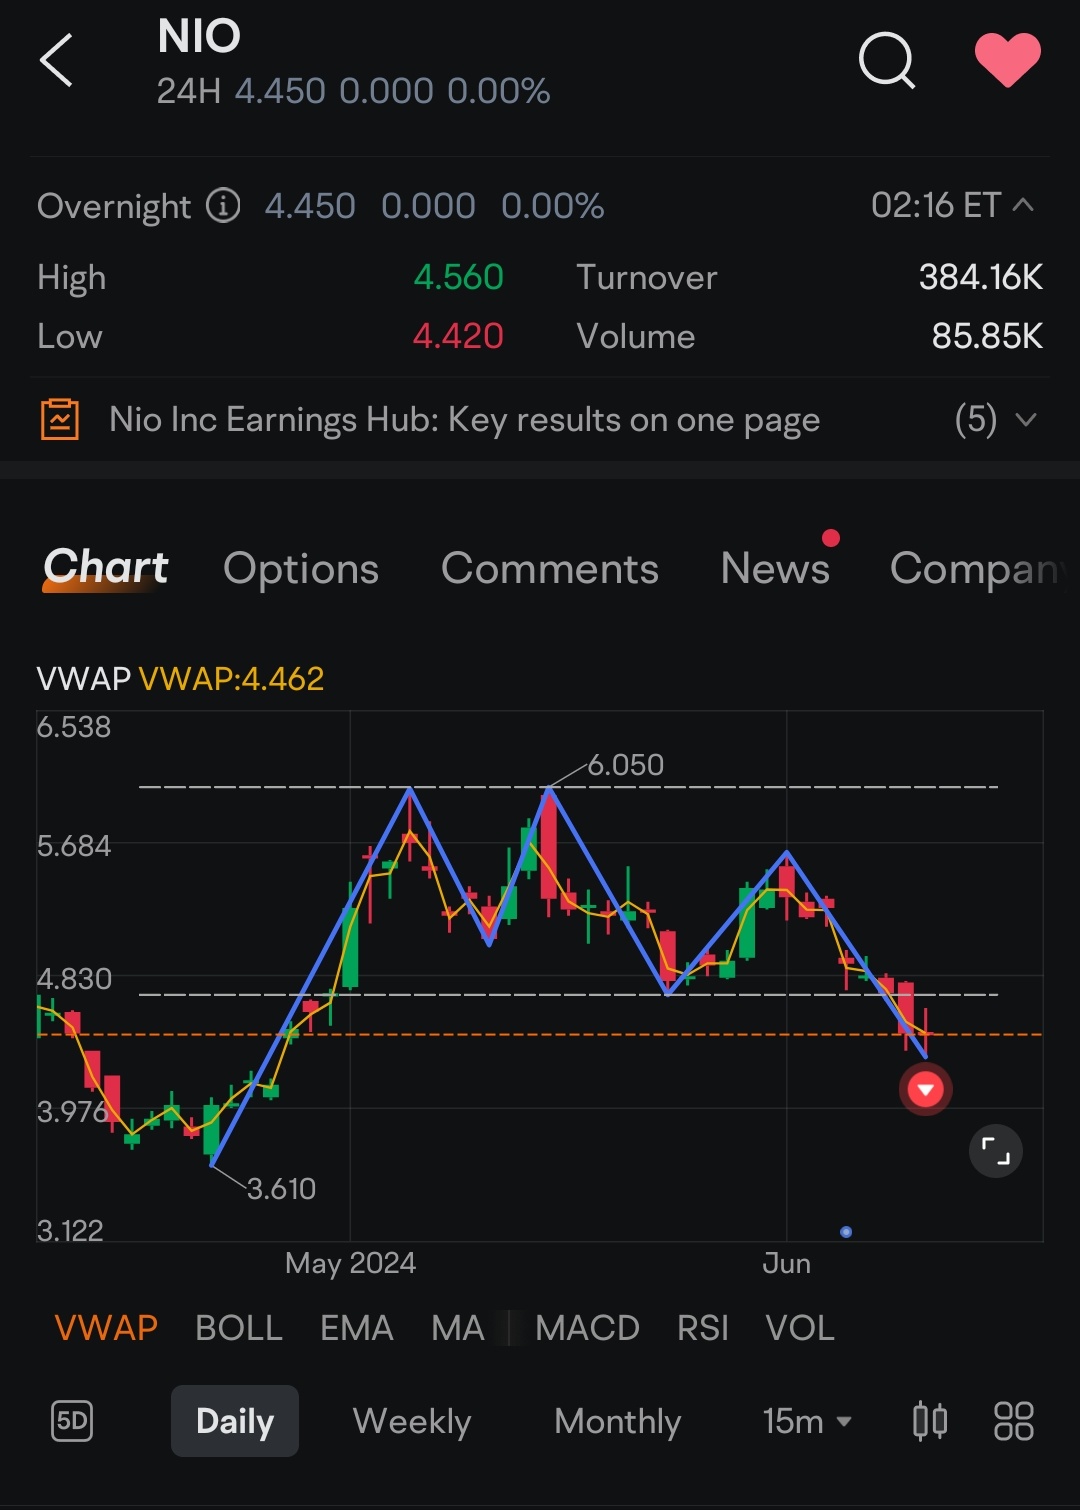 TA showed Triple Top Pattern on NIO chart Bearish signal share price fall trending